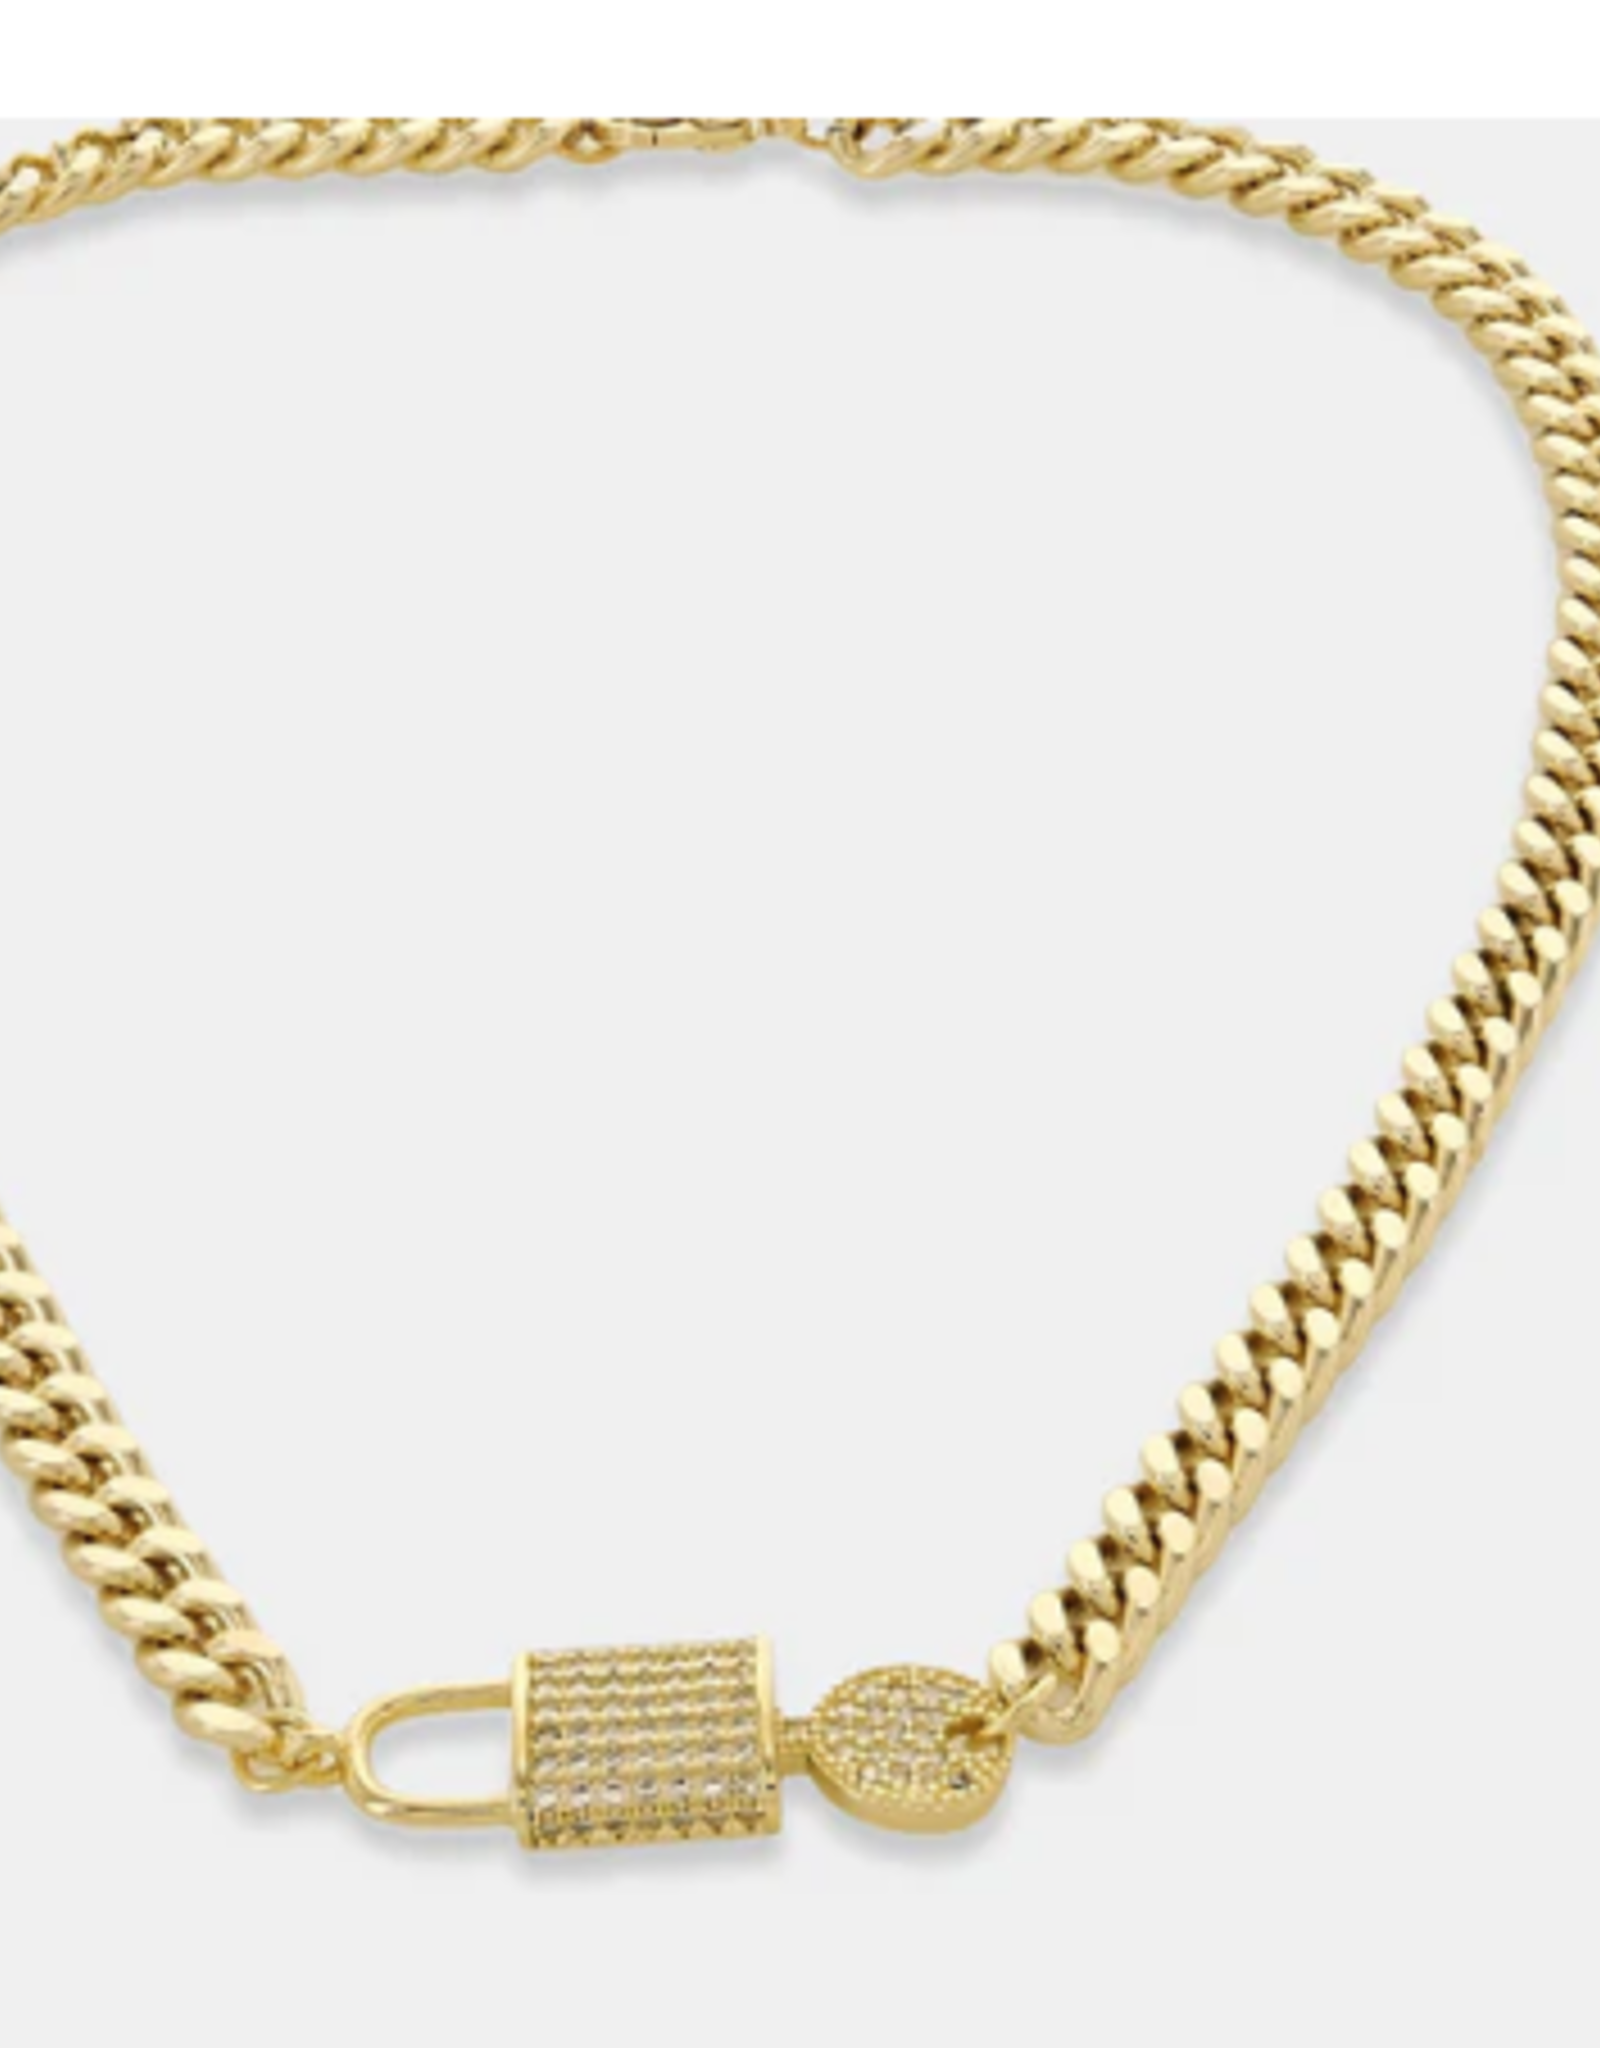 Gold Cuban Curb Chain  Lock & Key Necklace